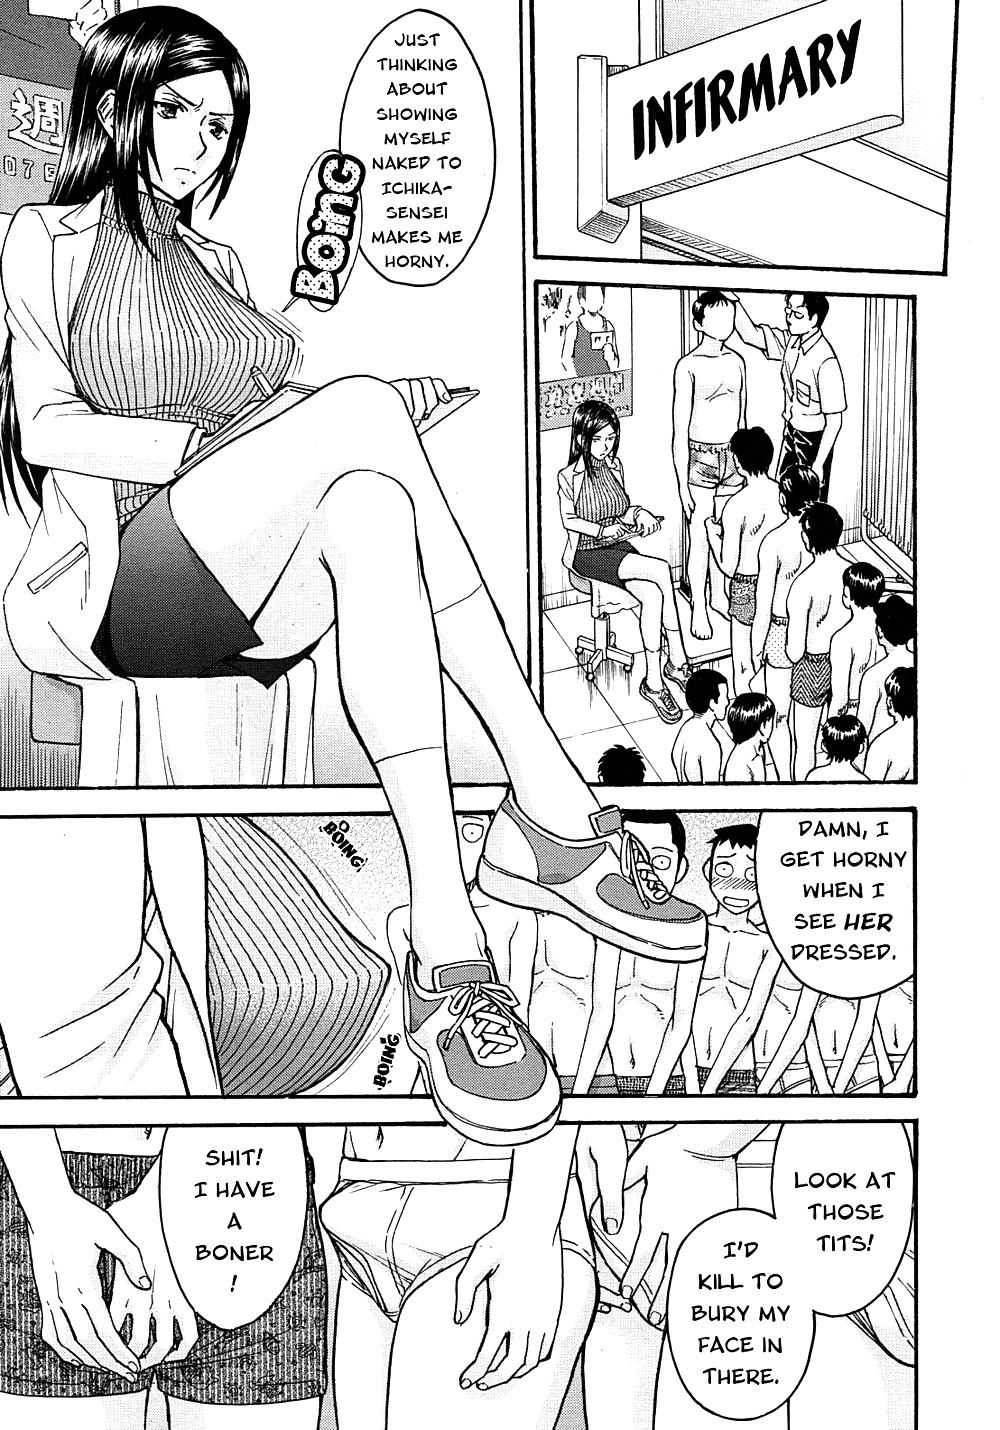 Frustrato sensei parte 1 (manga)
 #35467316